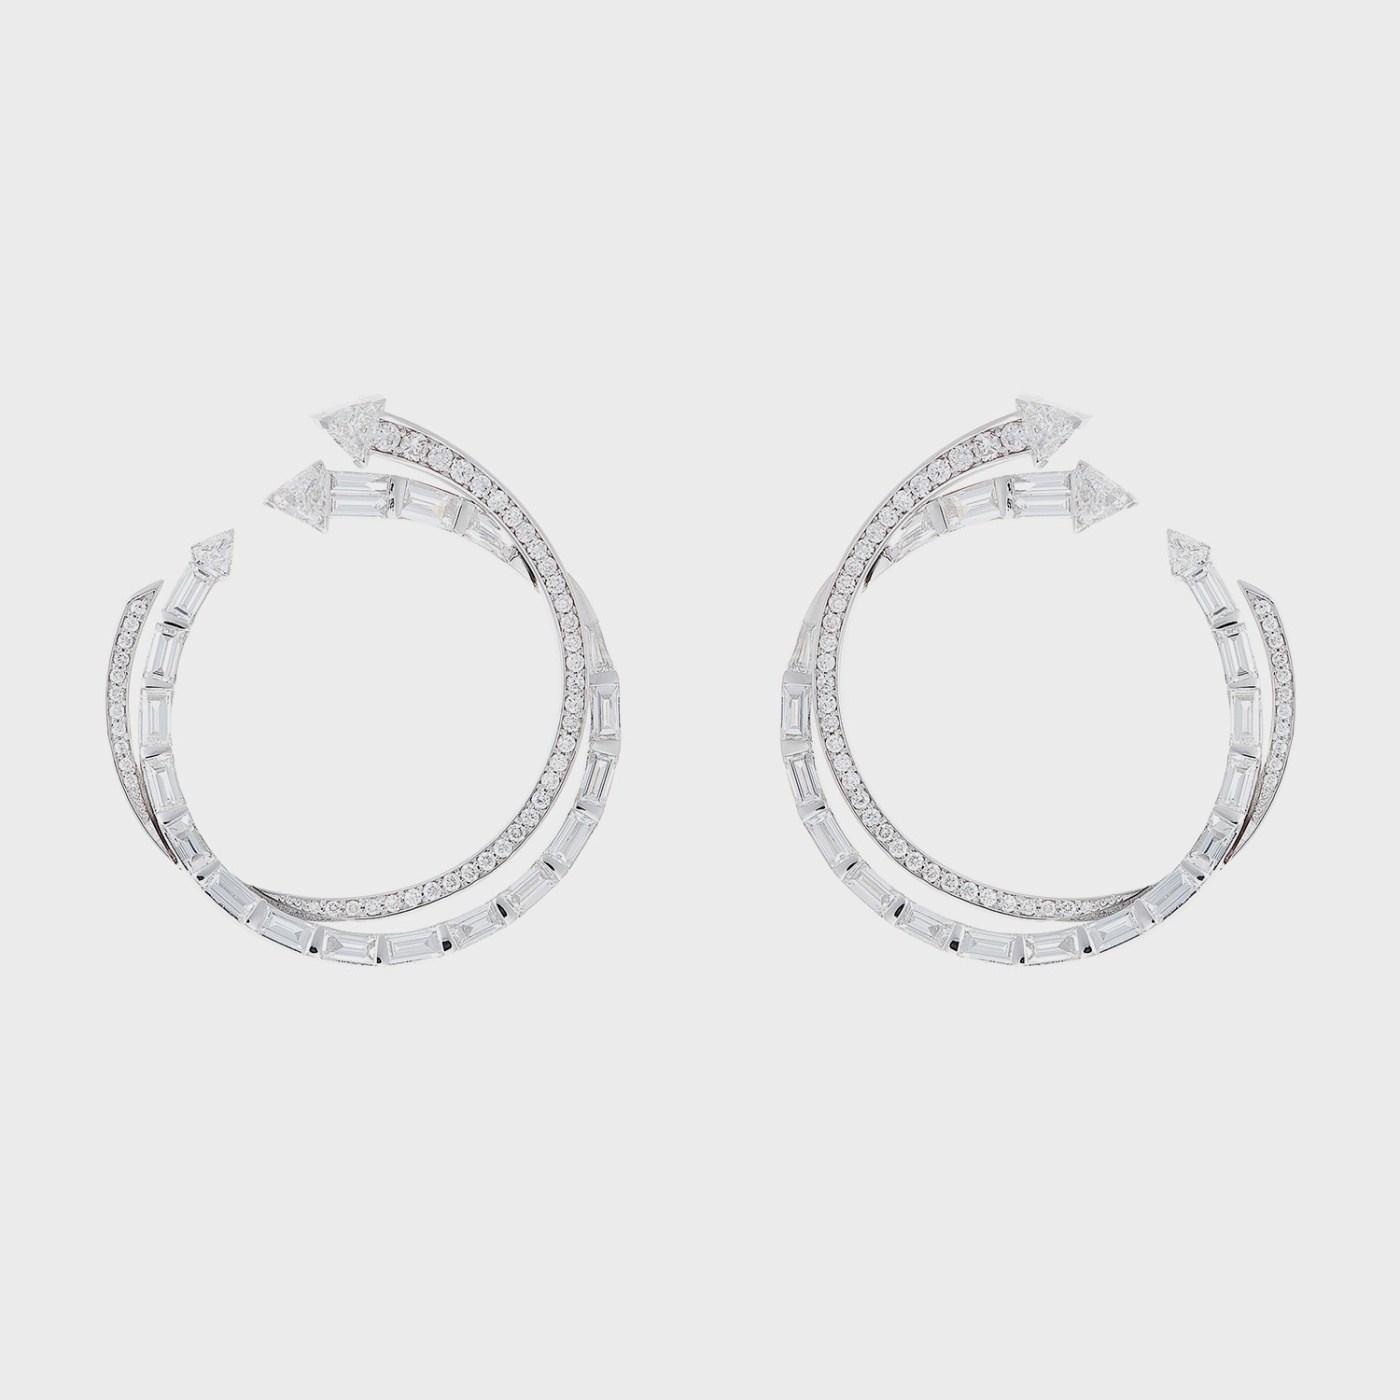 White gold hoop earrings with white diamonds